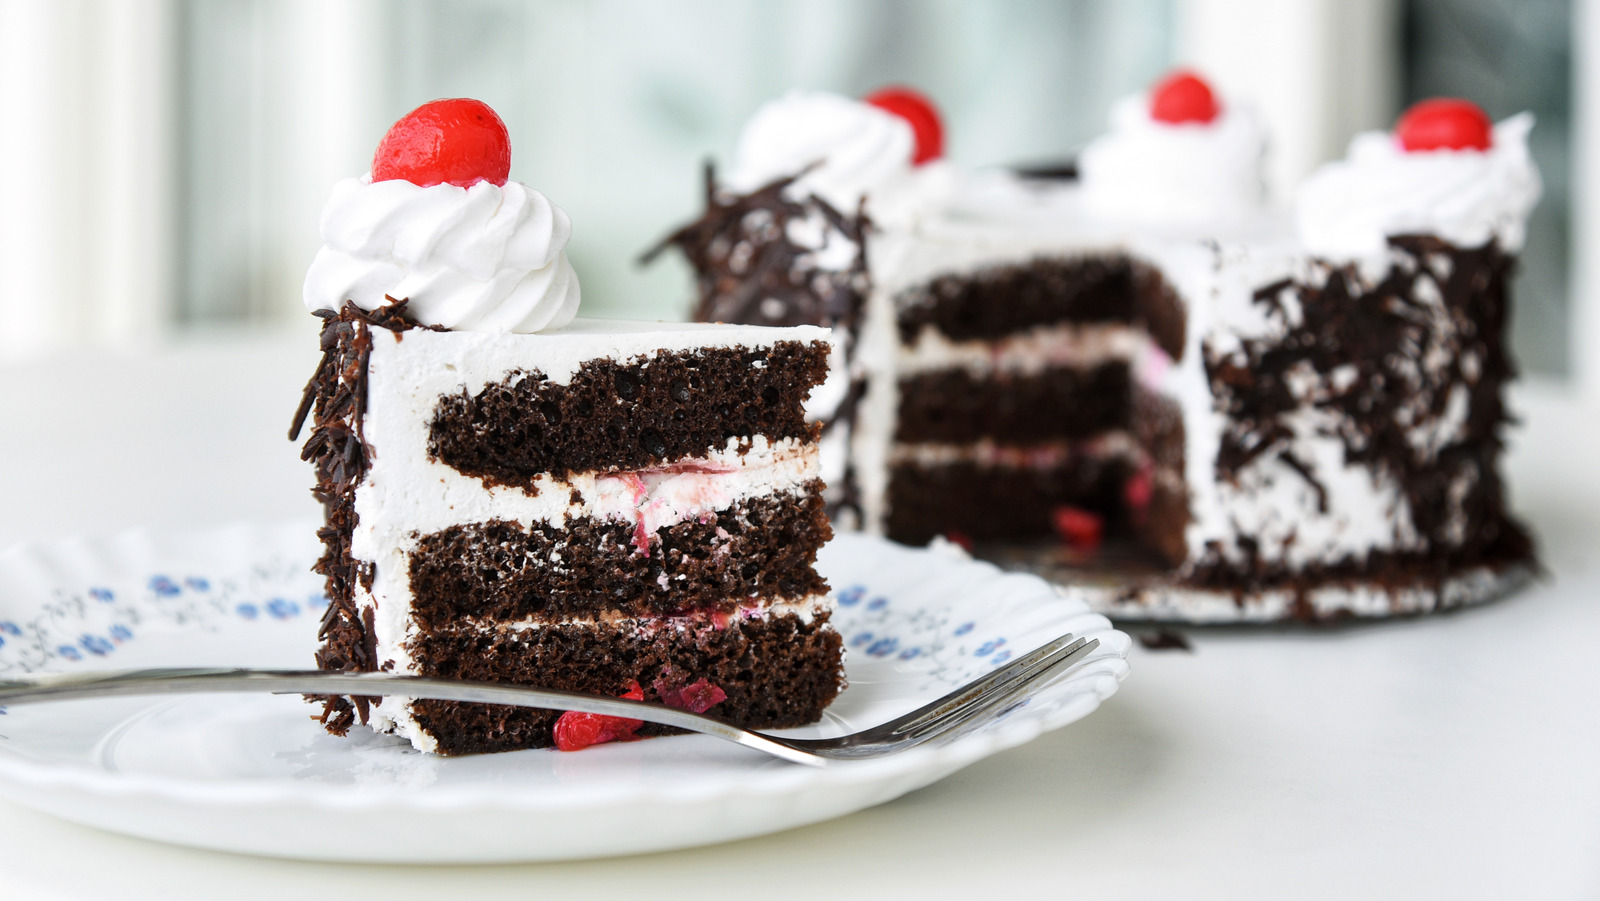 Black Forest Cake Pictures | Download Free Images on Unsplash